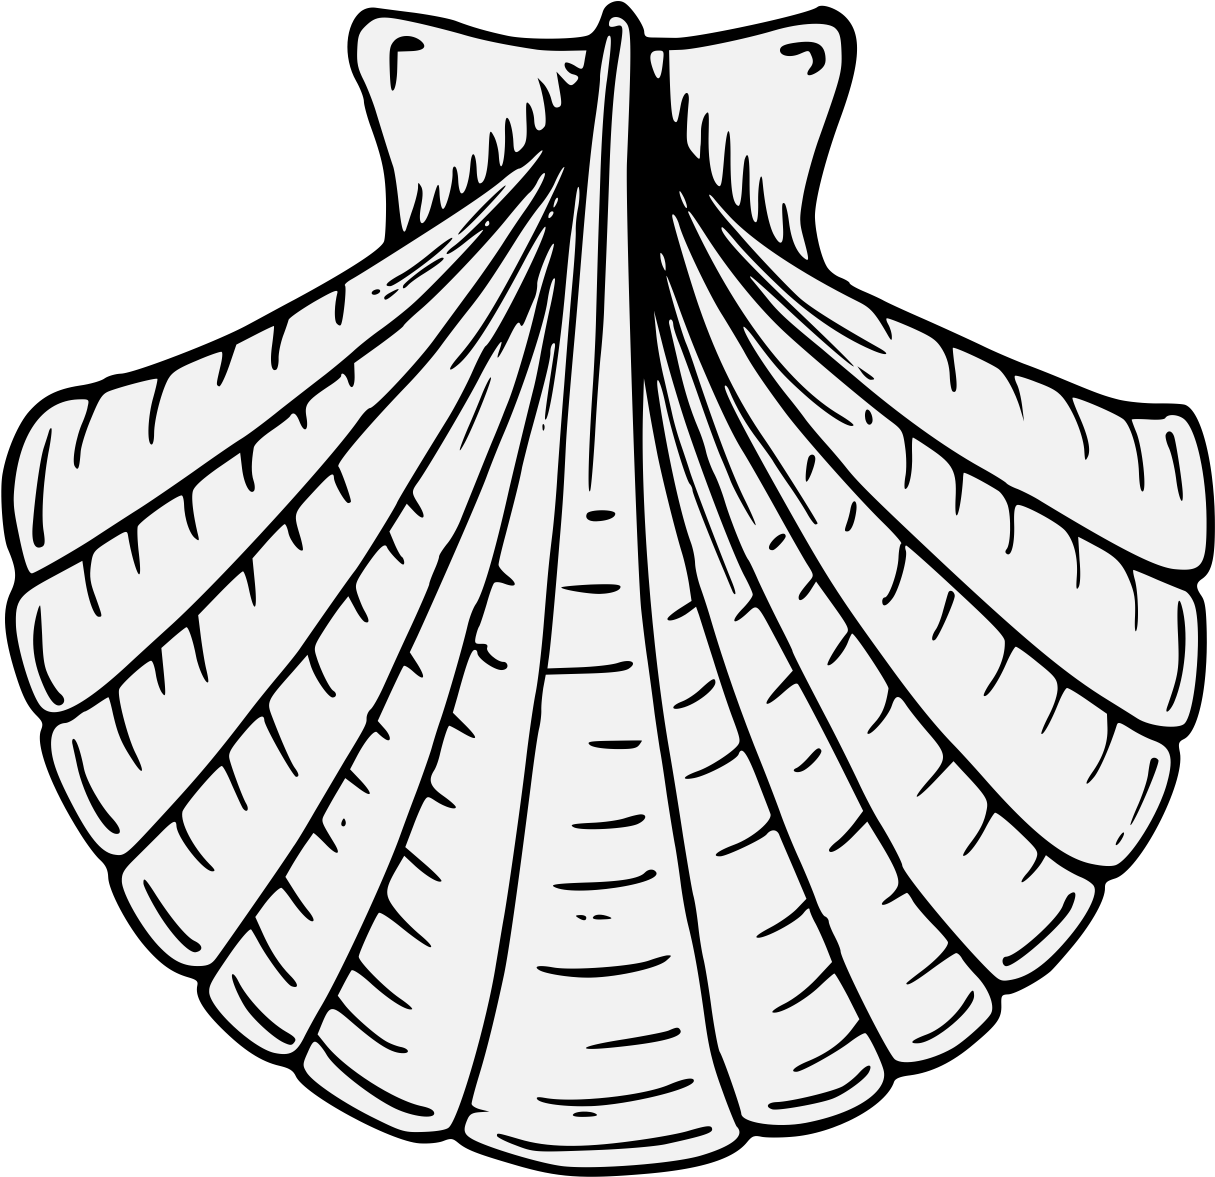 Pdf - Heraldic Scallop Shell (1218x1205)